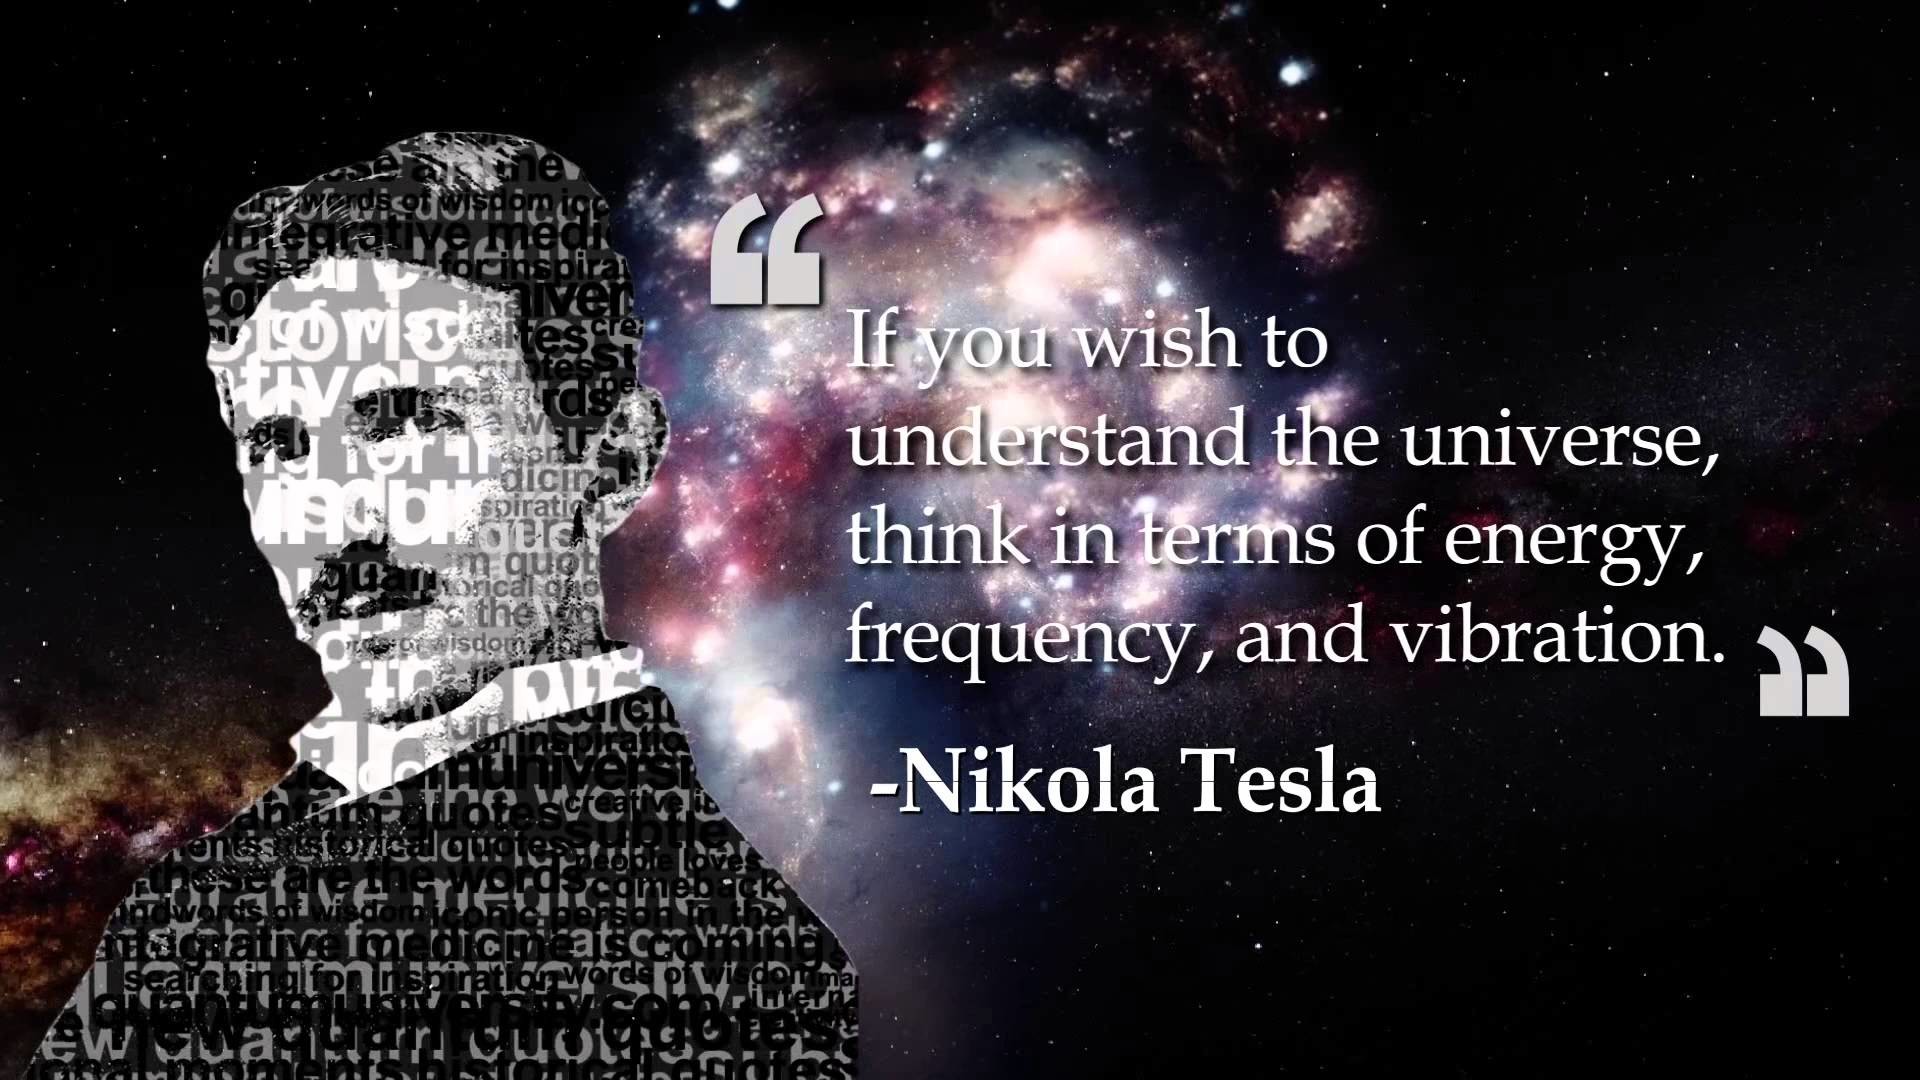 reddit the front page of the internet  Nikola tesla Tesla Nicolas tesla